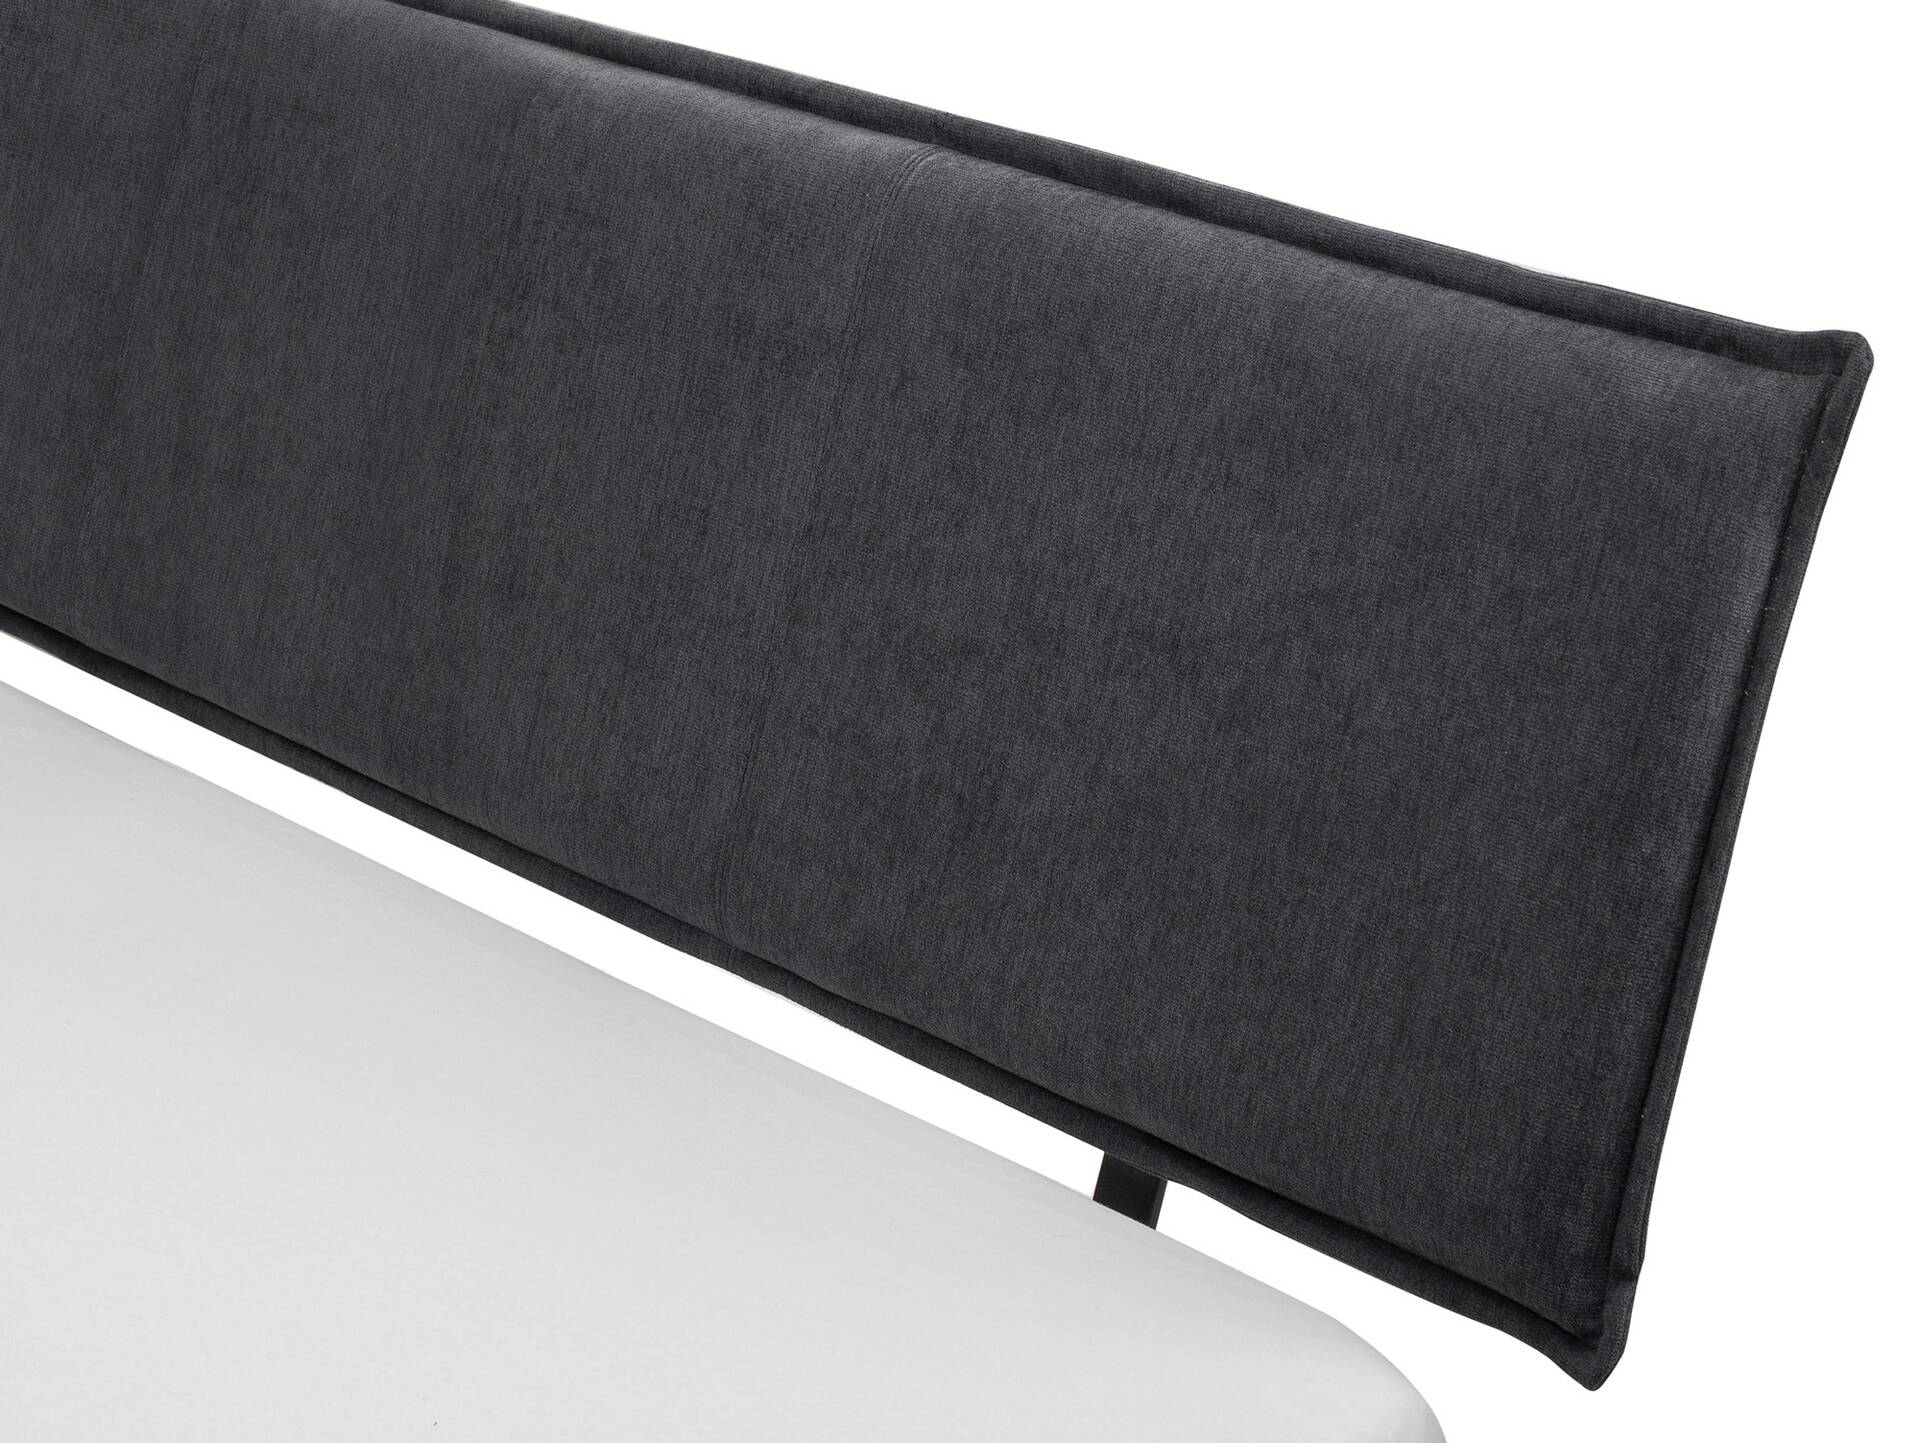 CALIDO 4-Fuß-Bett mit Polster-Kopfteil, Material Massivholz 180 x 200 cm | Buche weiss lackiert | Stoff Anthrazit | Komforthöhe